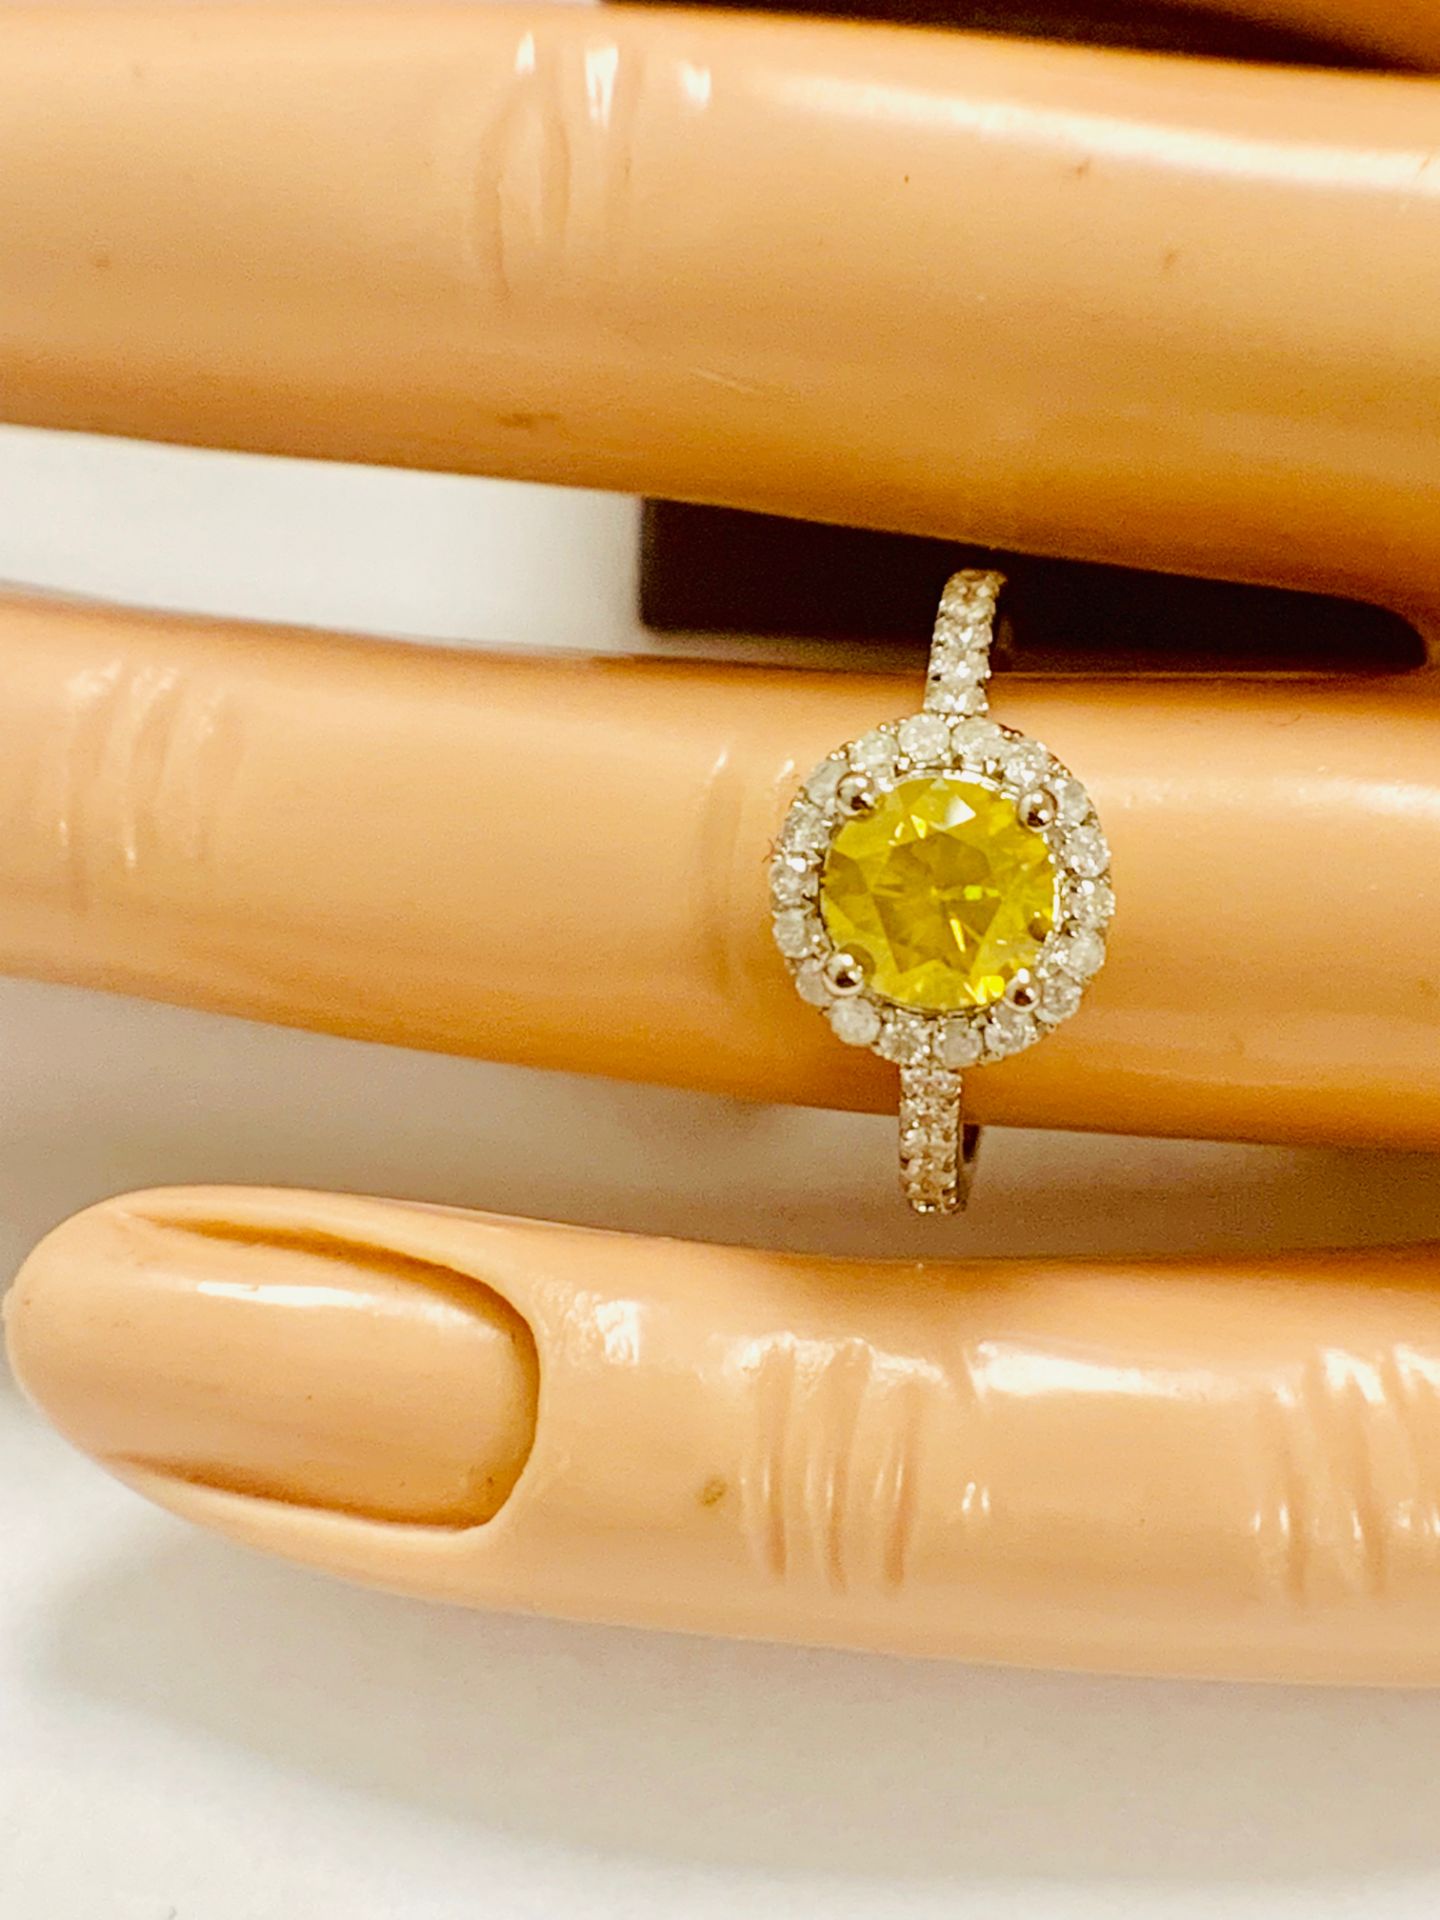 14ct White Gold Diamond ring featuring centre, round brilliant cut, yellow Diamond (1.08ct) - Image 10 of 12